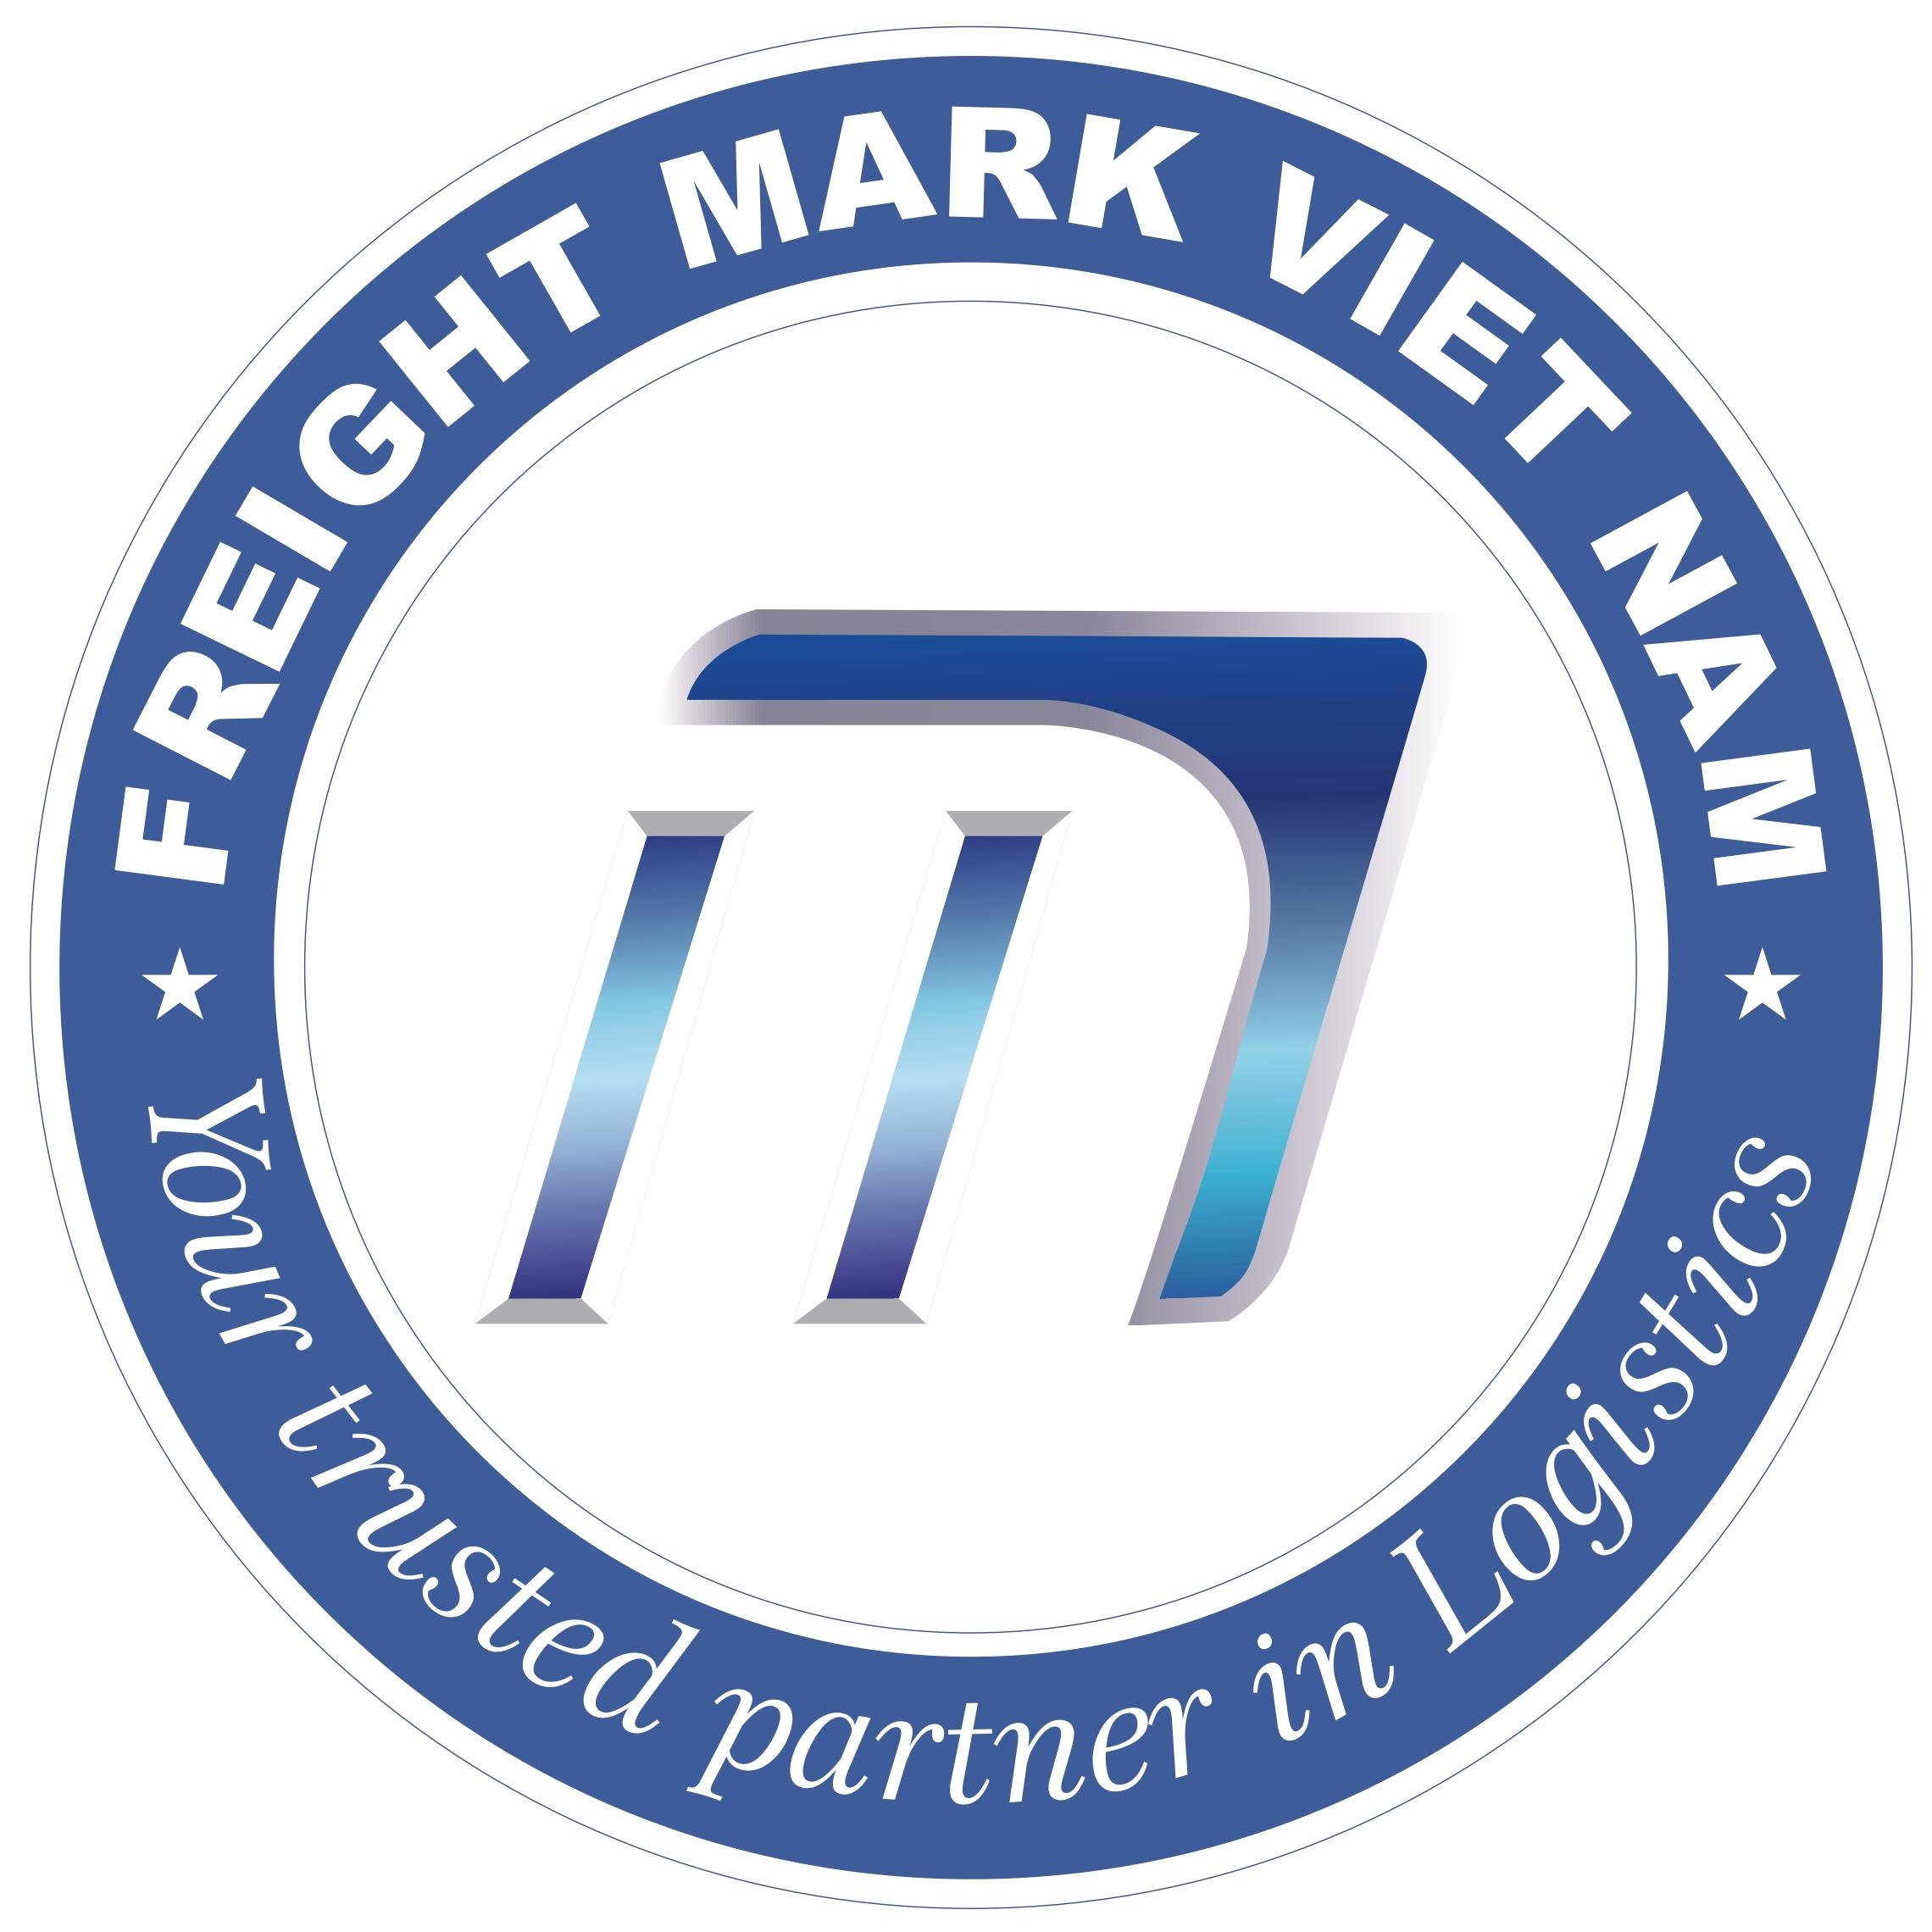 Freight Mark Việt Nam 